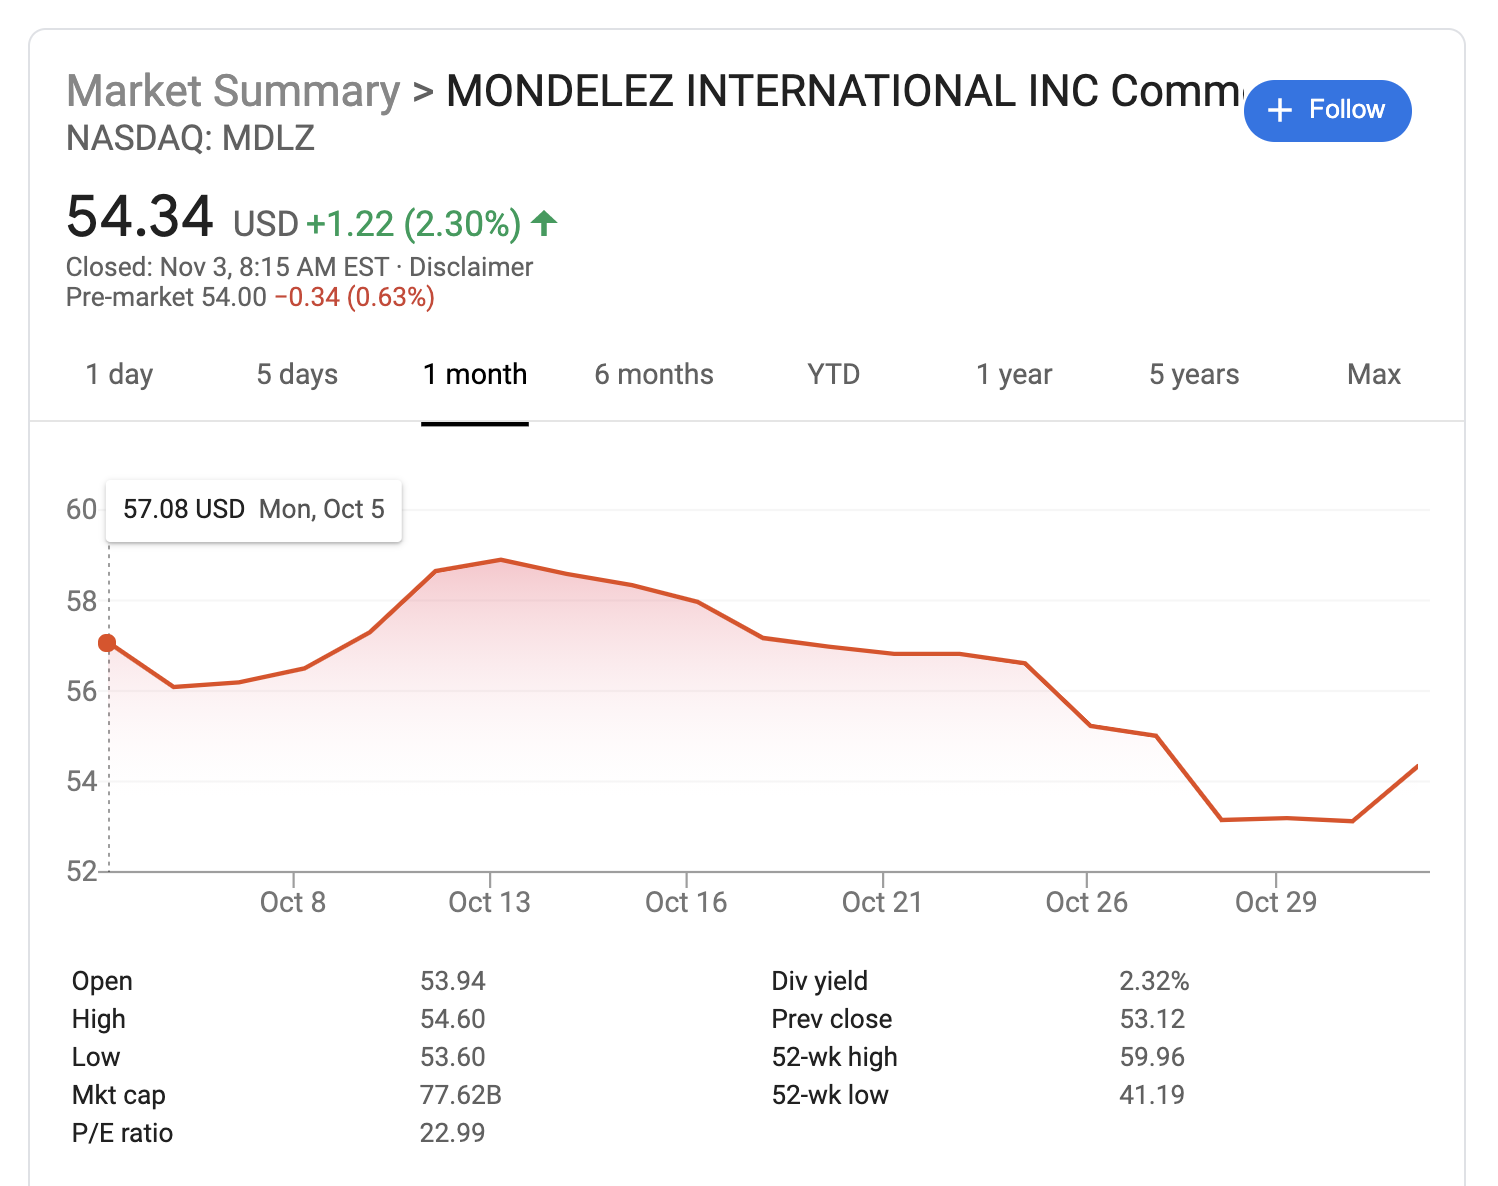 Modelez International stock